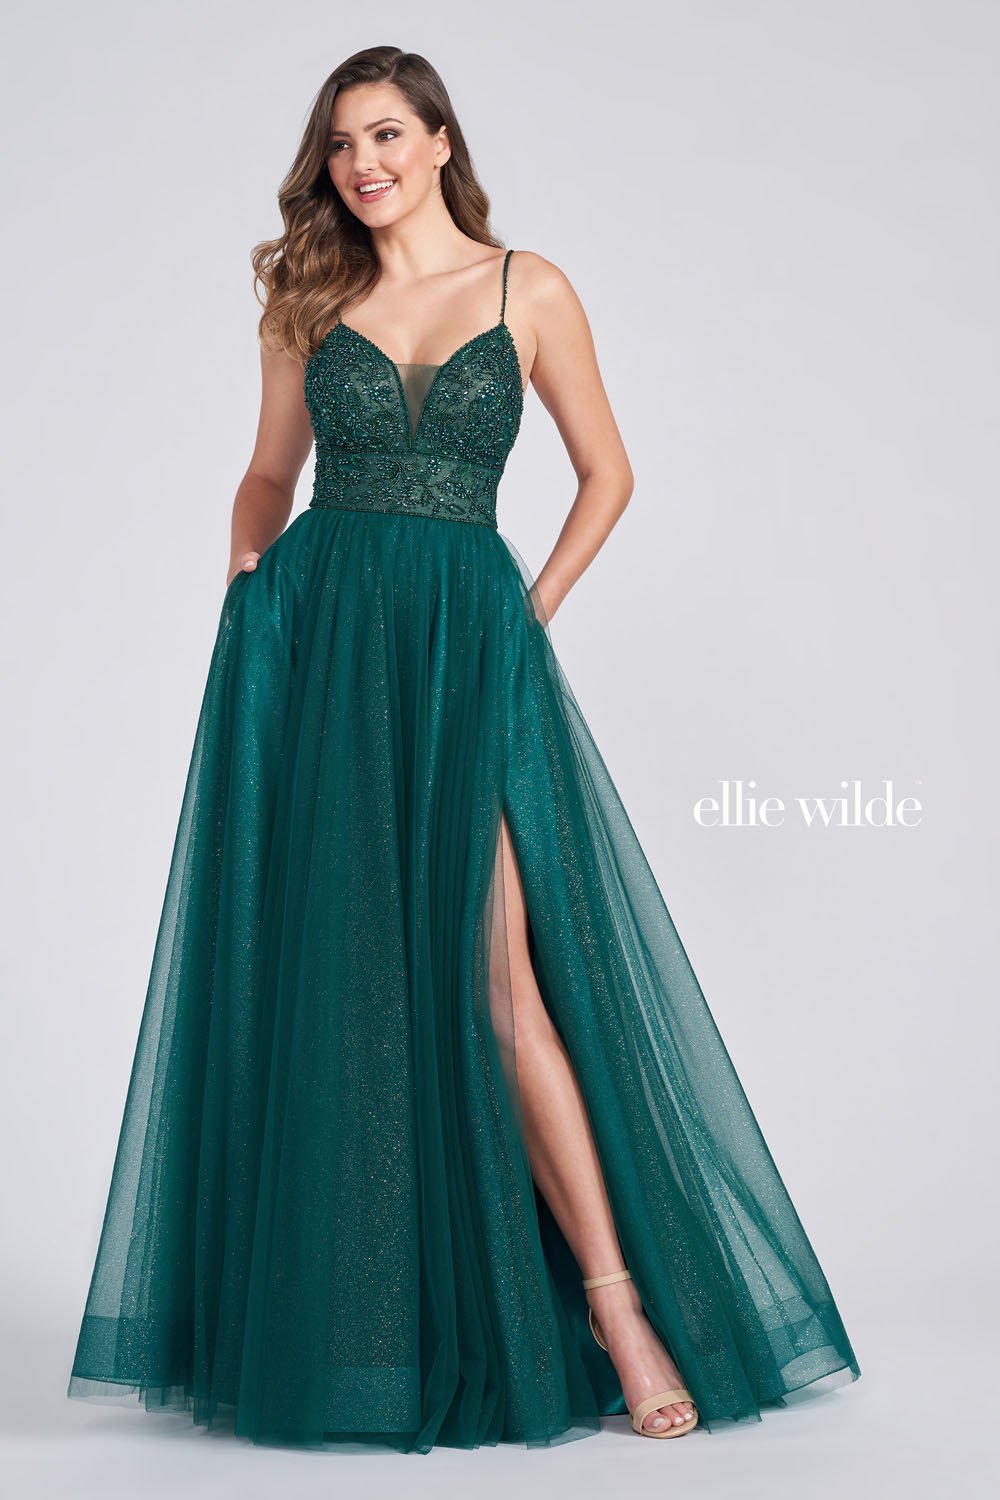 Ellie Wilde Emerald EW122066 Prom Dress Image.  Emerald formal dress.